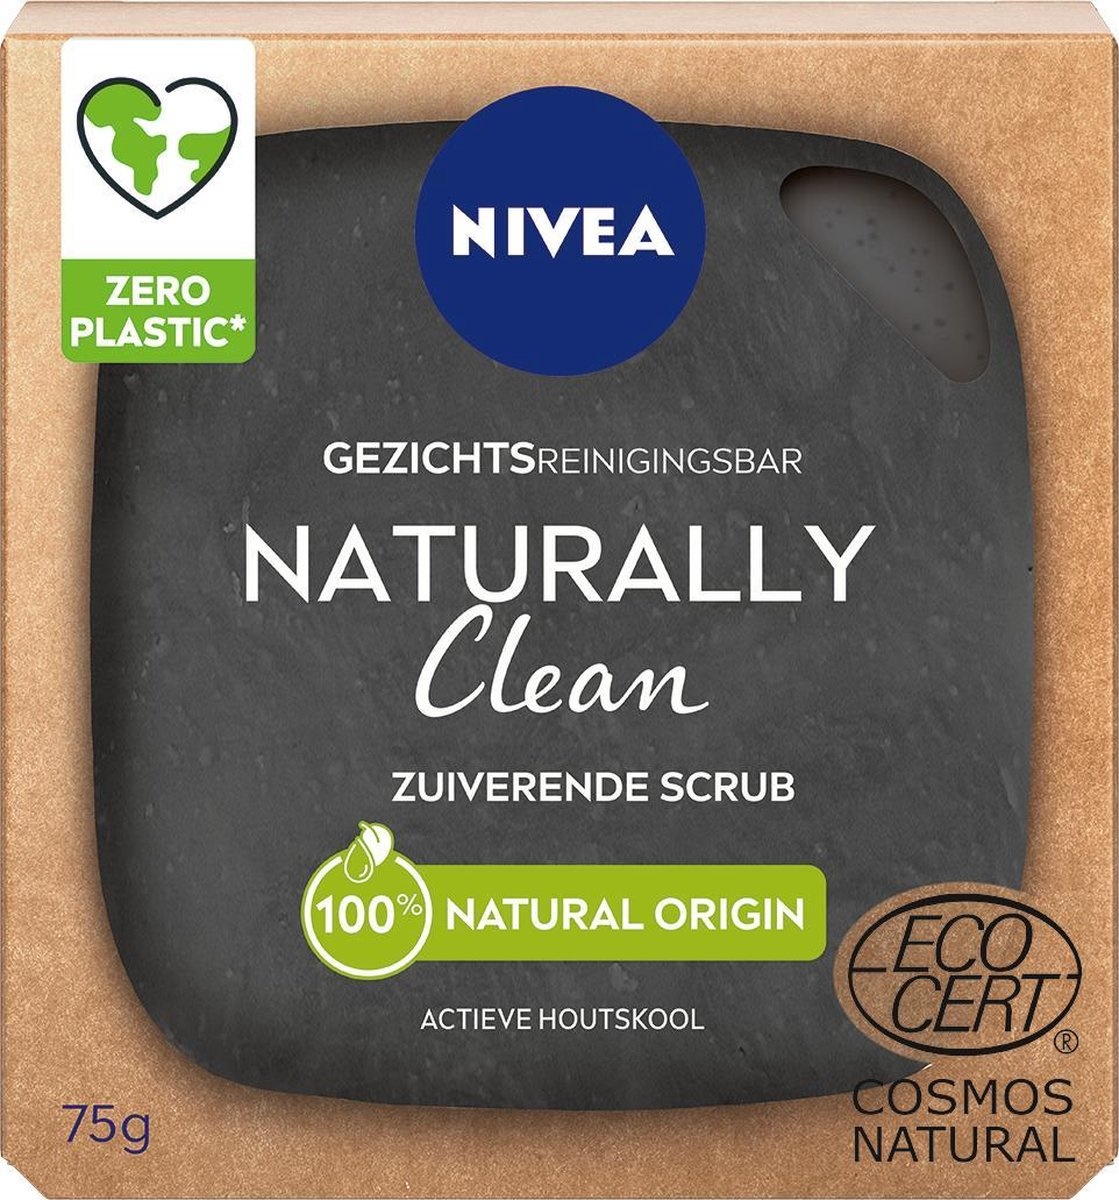 NIVEA Naturally Clean Face Bar Gommage Purifiant - 75g